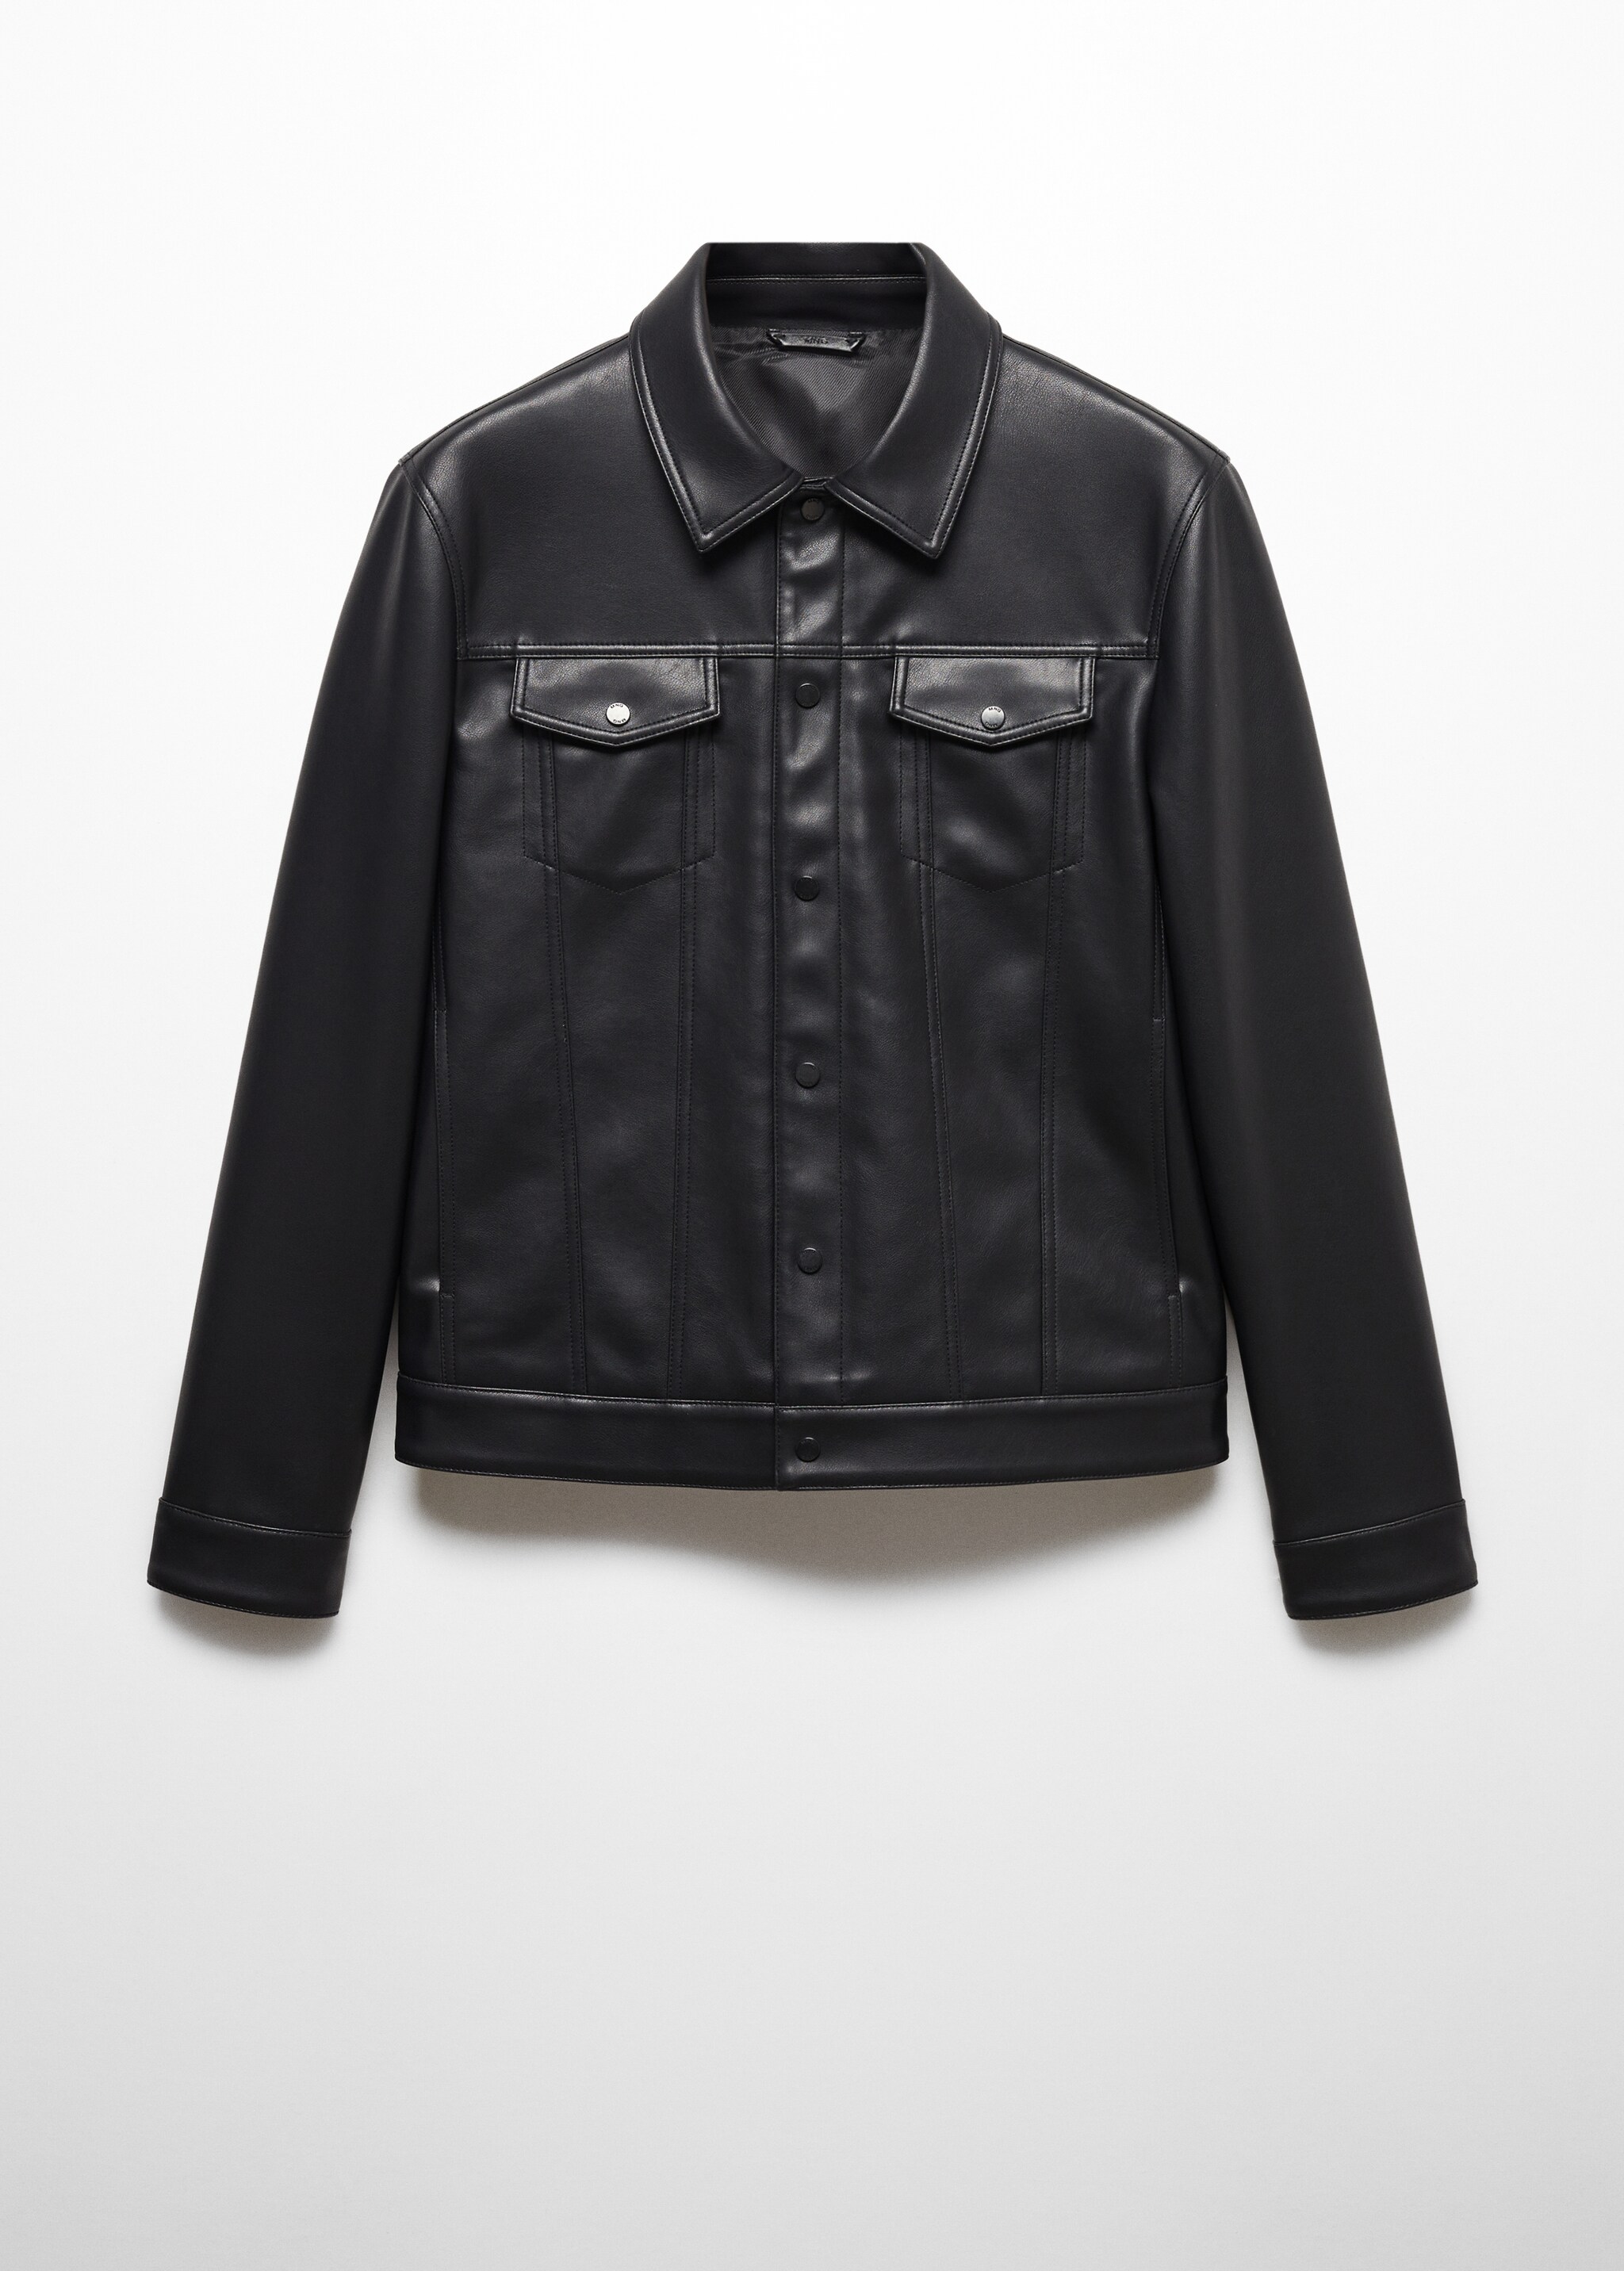 Faux leather jacket with pockets - Изделие без модели